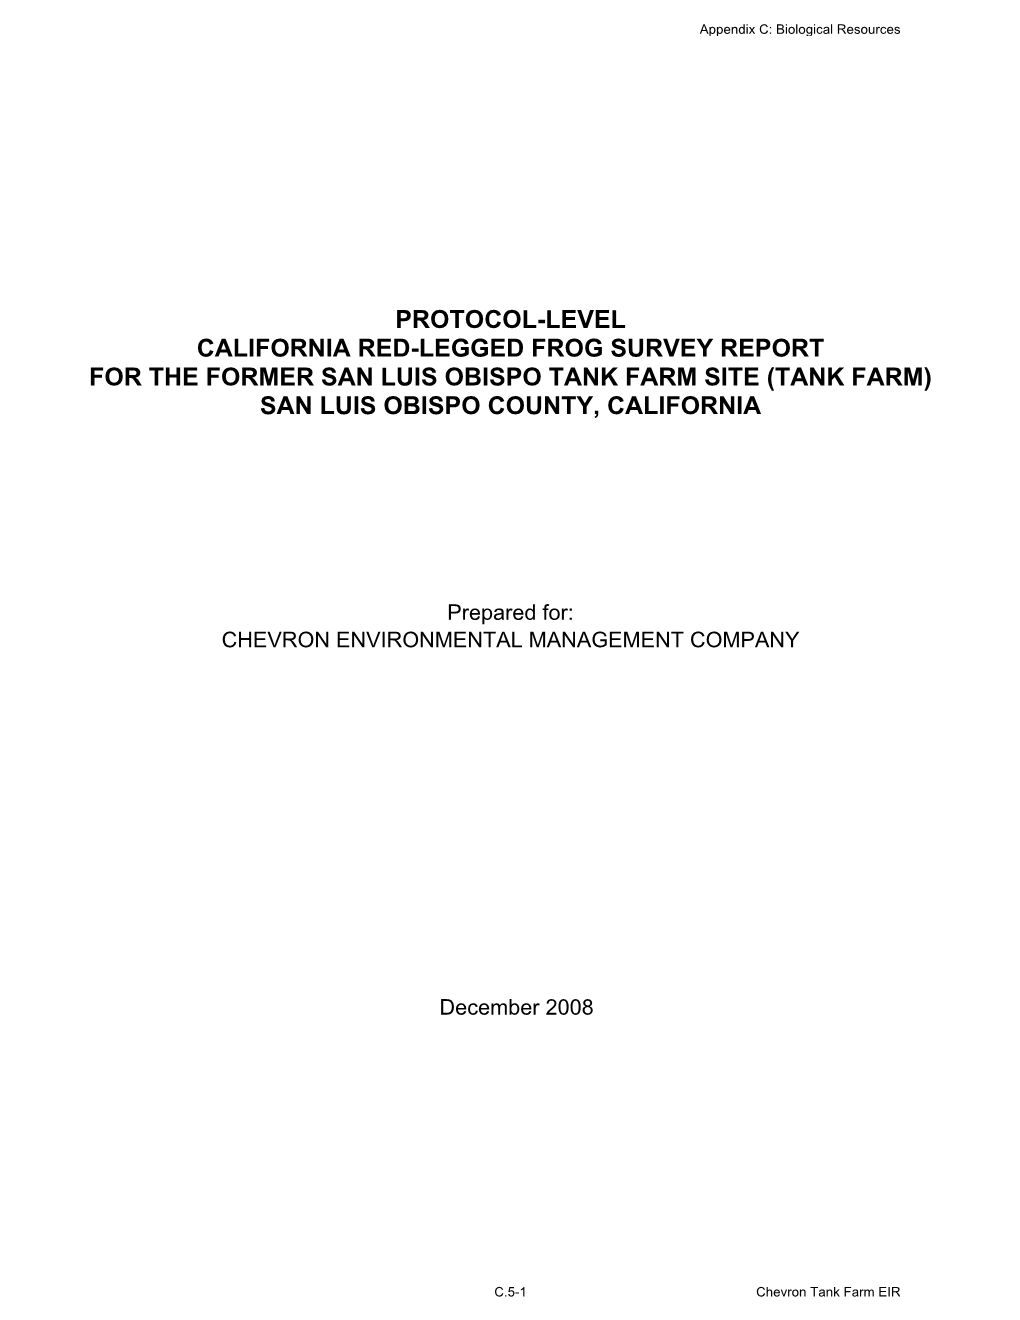 Appendix C.5-California Red Legged Frog Report